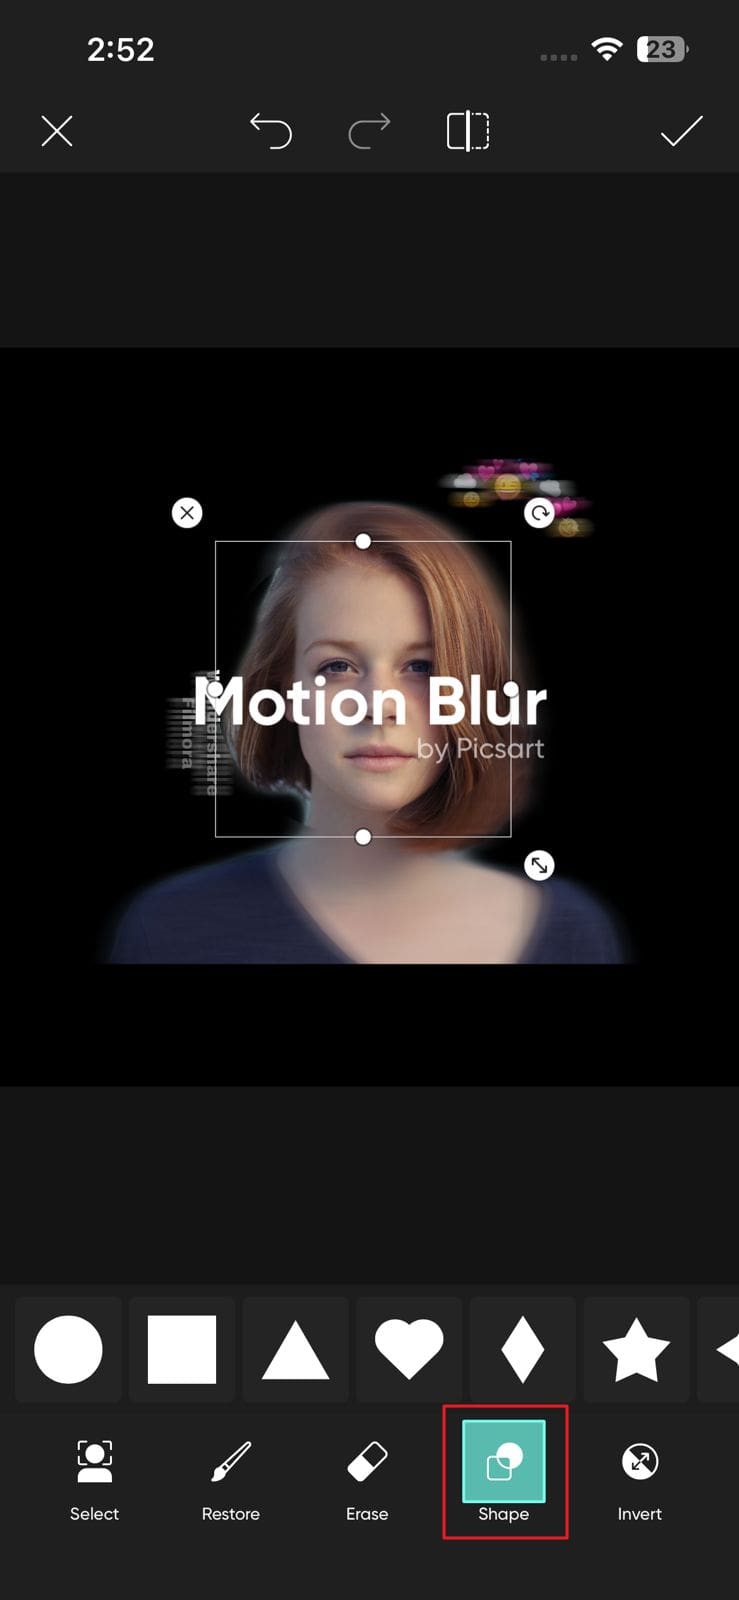 adjust the added motion blur